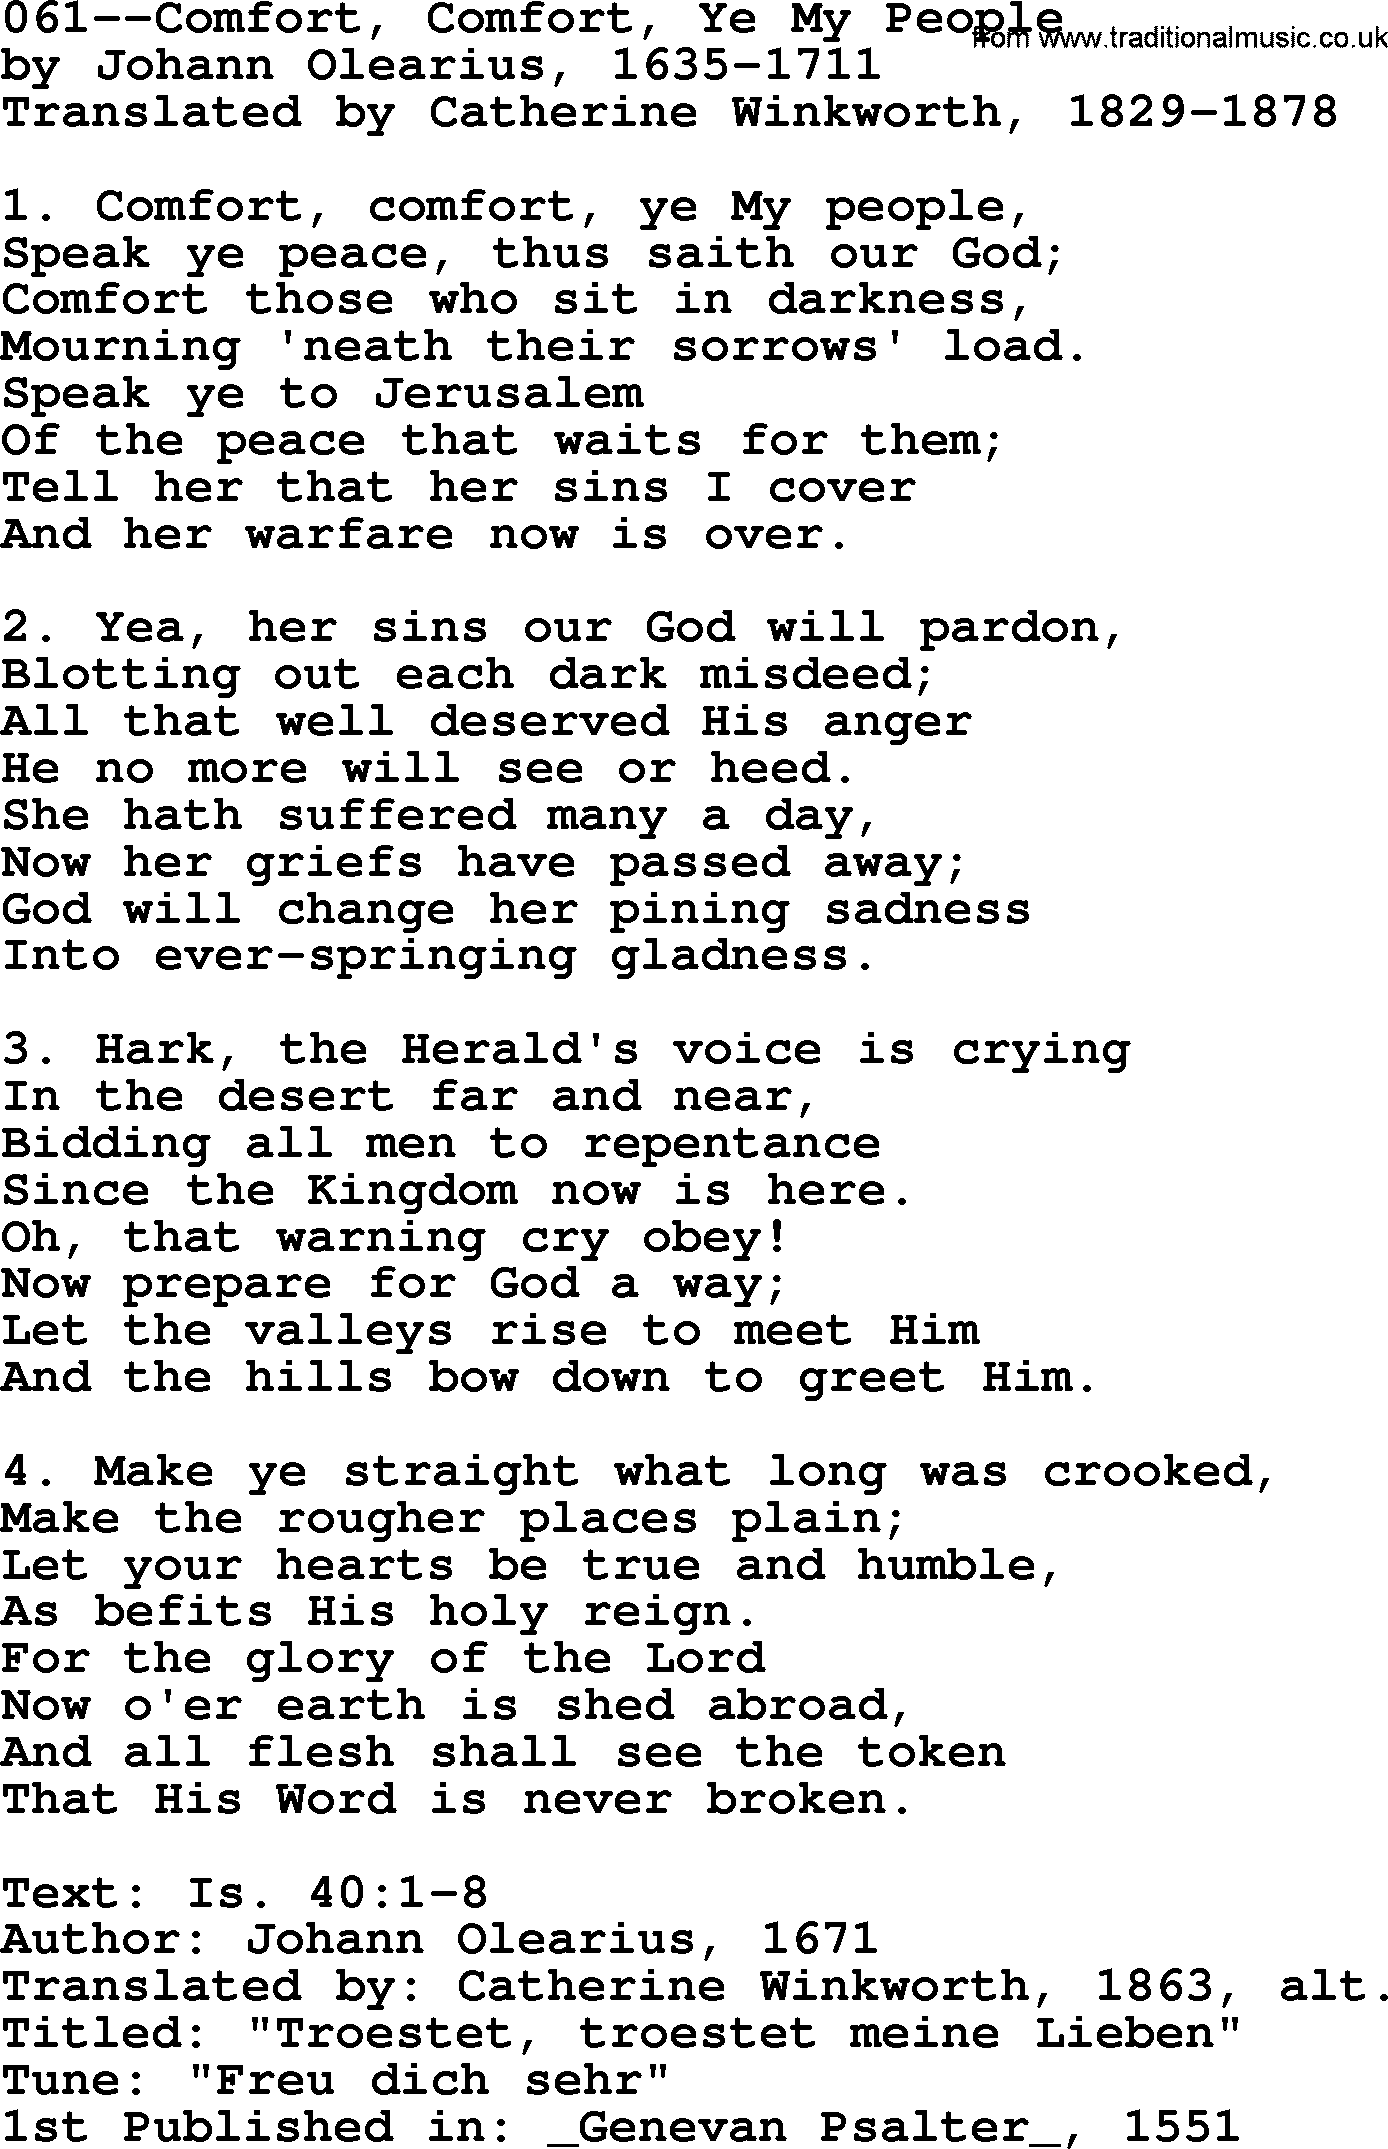 Lutheran Hymn: 061--Comfort, Comfort, Ye My People.txt lyrics with PDF